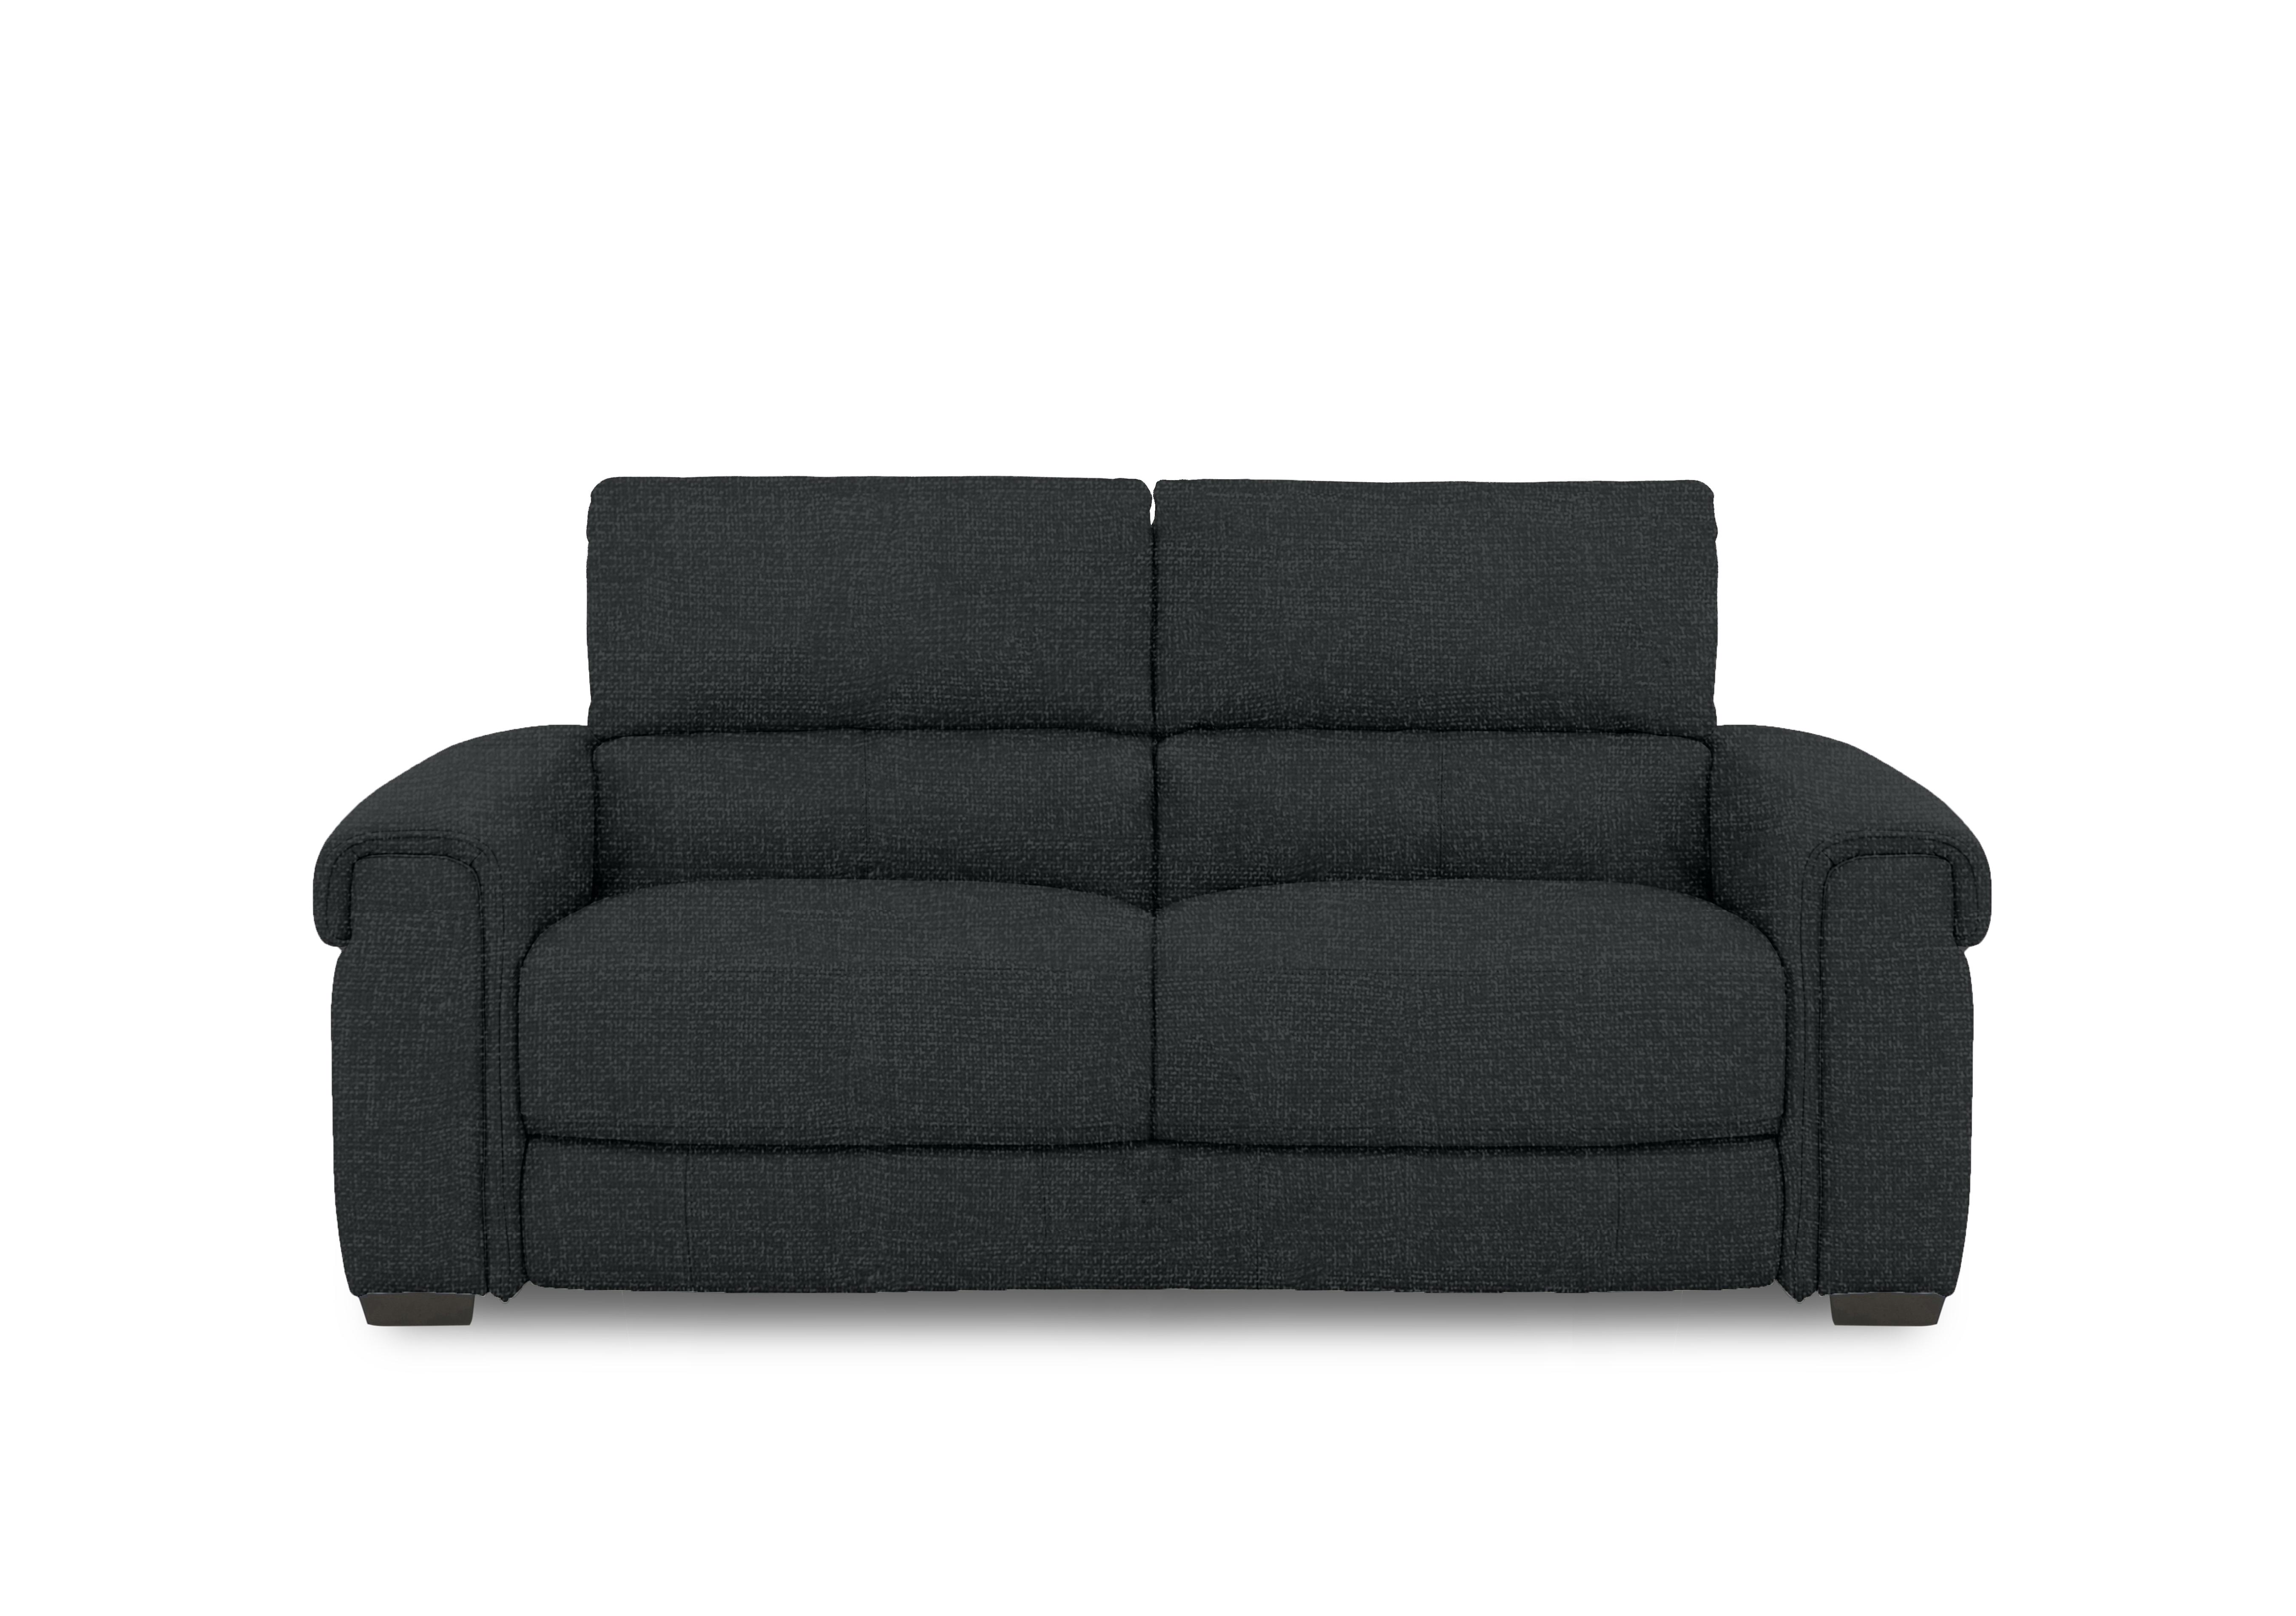 Nixon Fabric 3 Seater Sofa in Fab-Cac-R463 Black Mica on Furniture Village